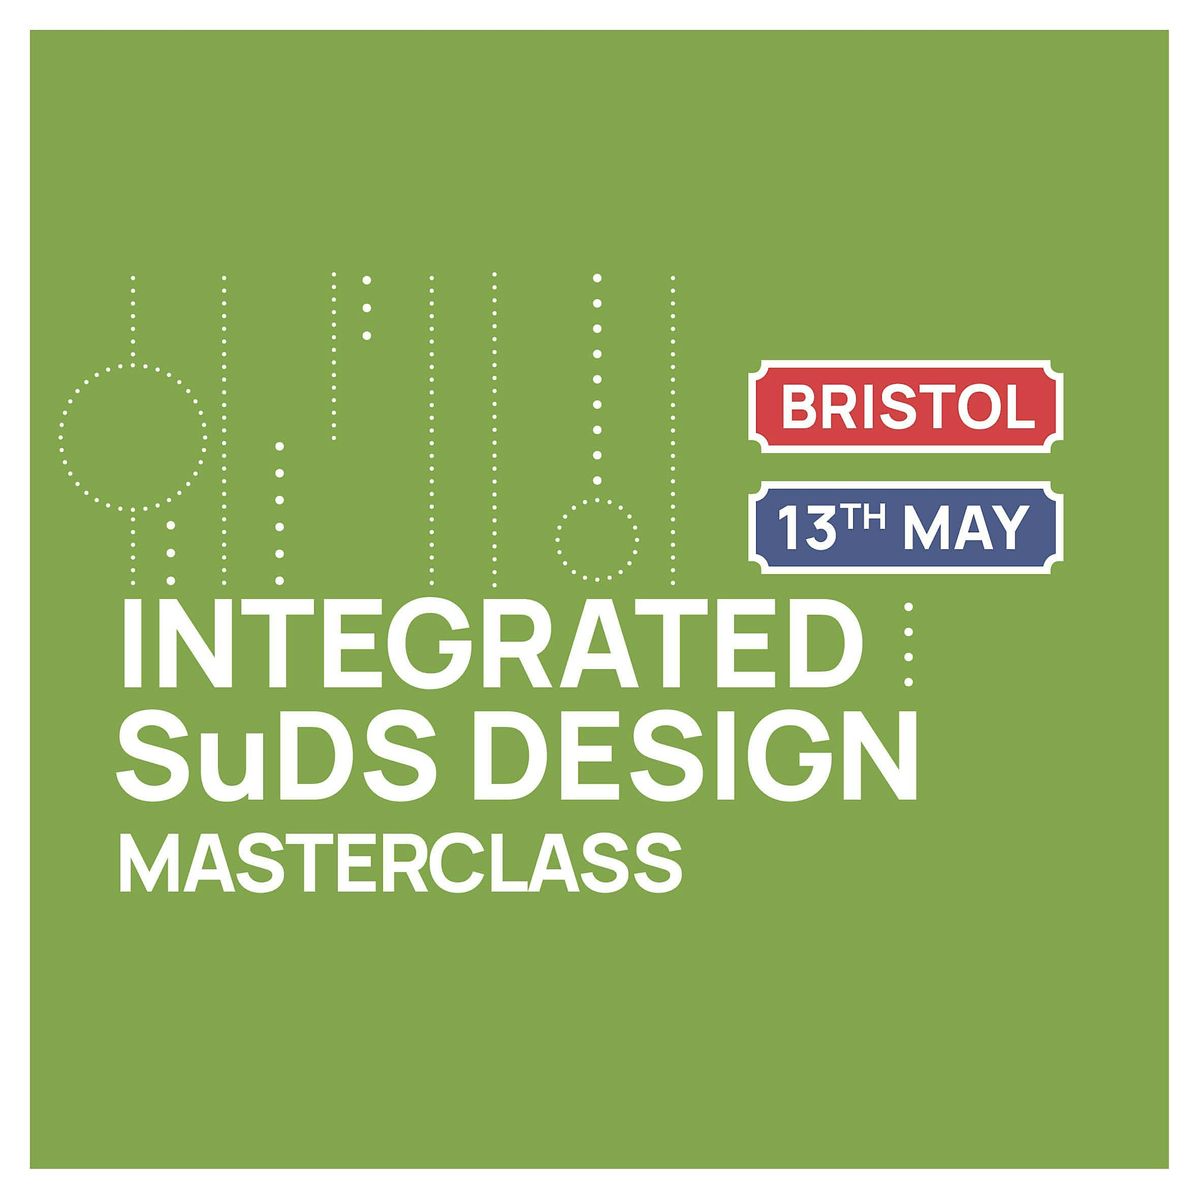 Integrated SuDS Design Masterclass